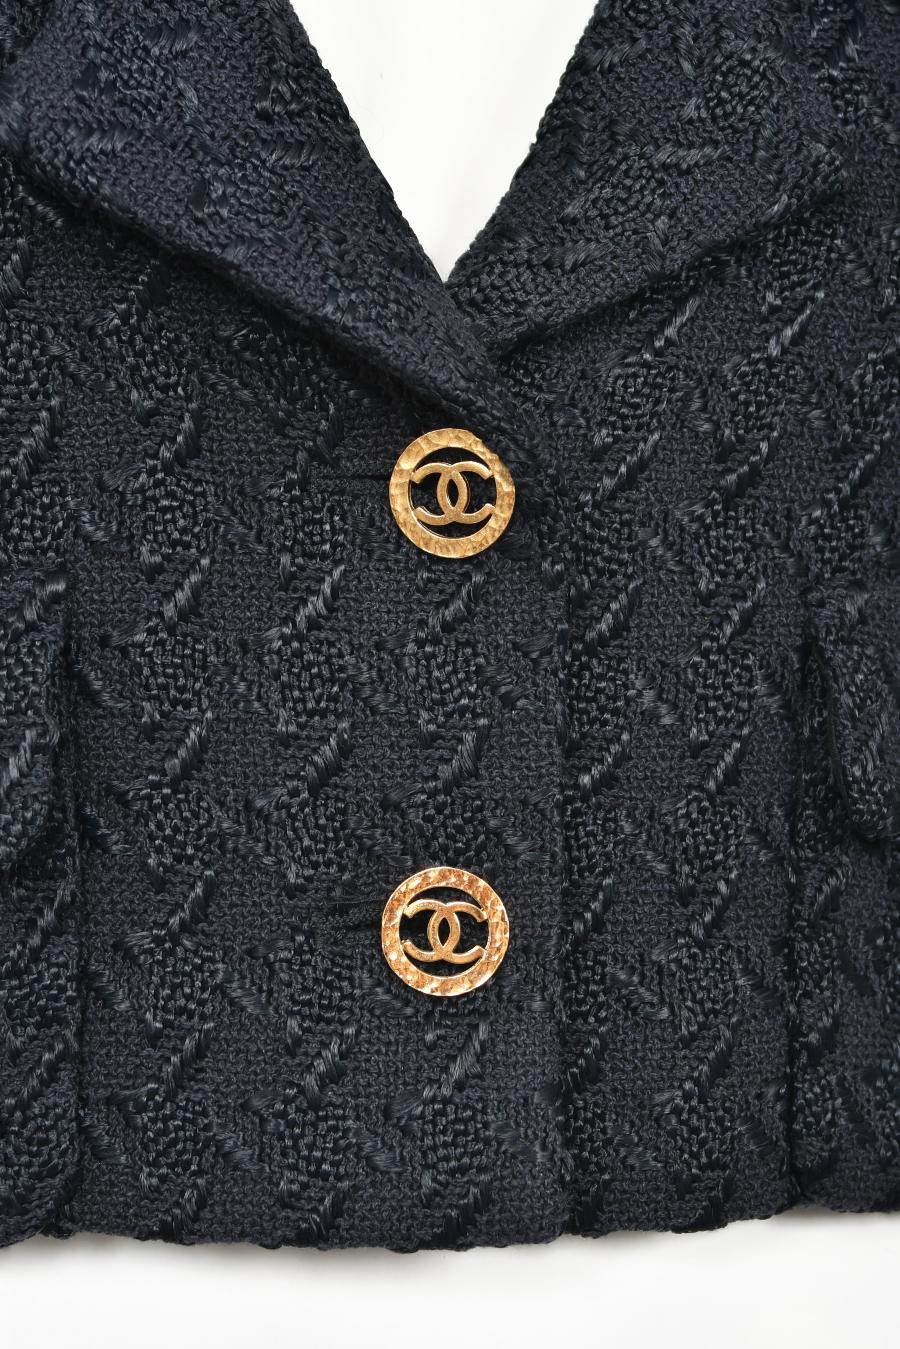 Vintage 1993 Chanel by Karl Lagerfeld Runway Midnight Blue Wool Cropped Jacket  9